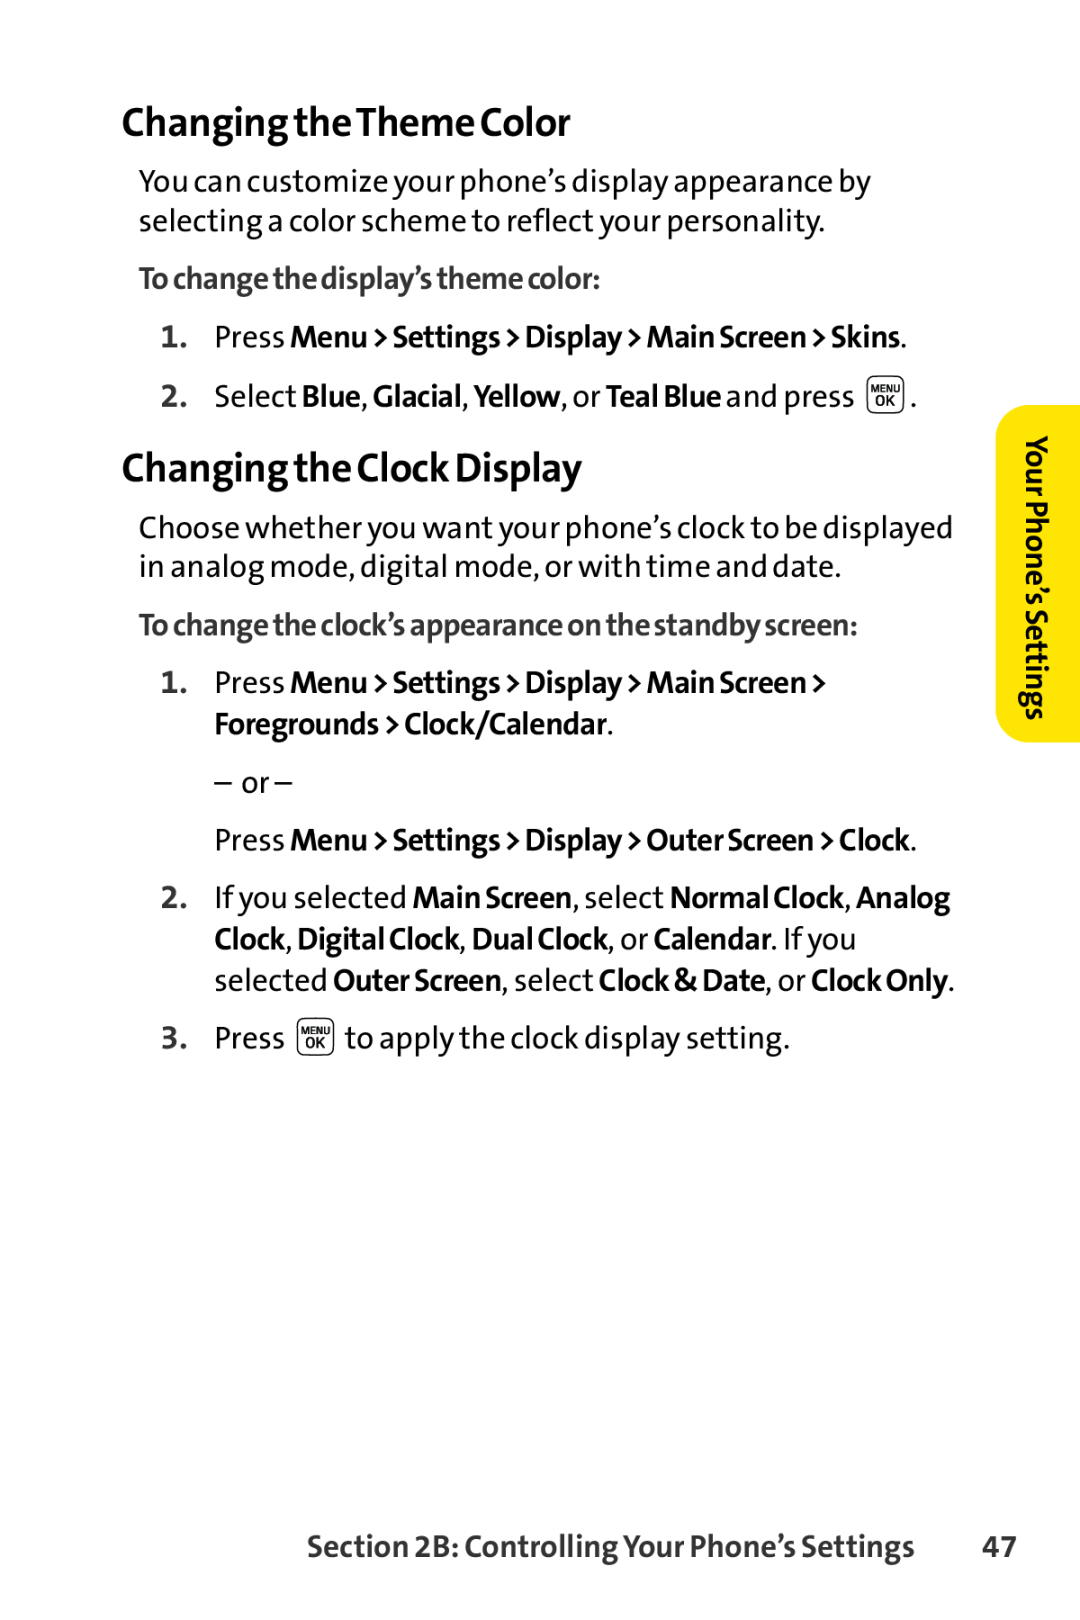 Sprint Nextel LX160 manual Changing theTheme Color, Changing the Clock Display, Tochangethedisplay’sthemecolor 